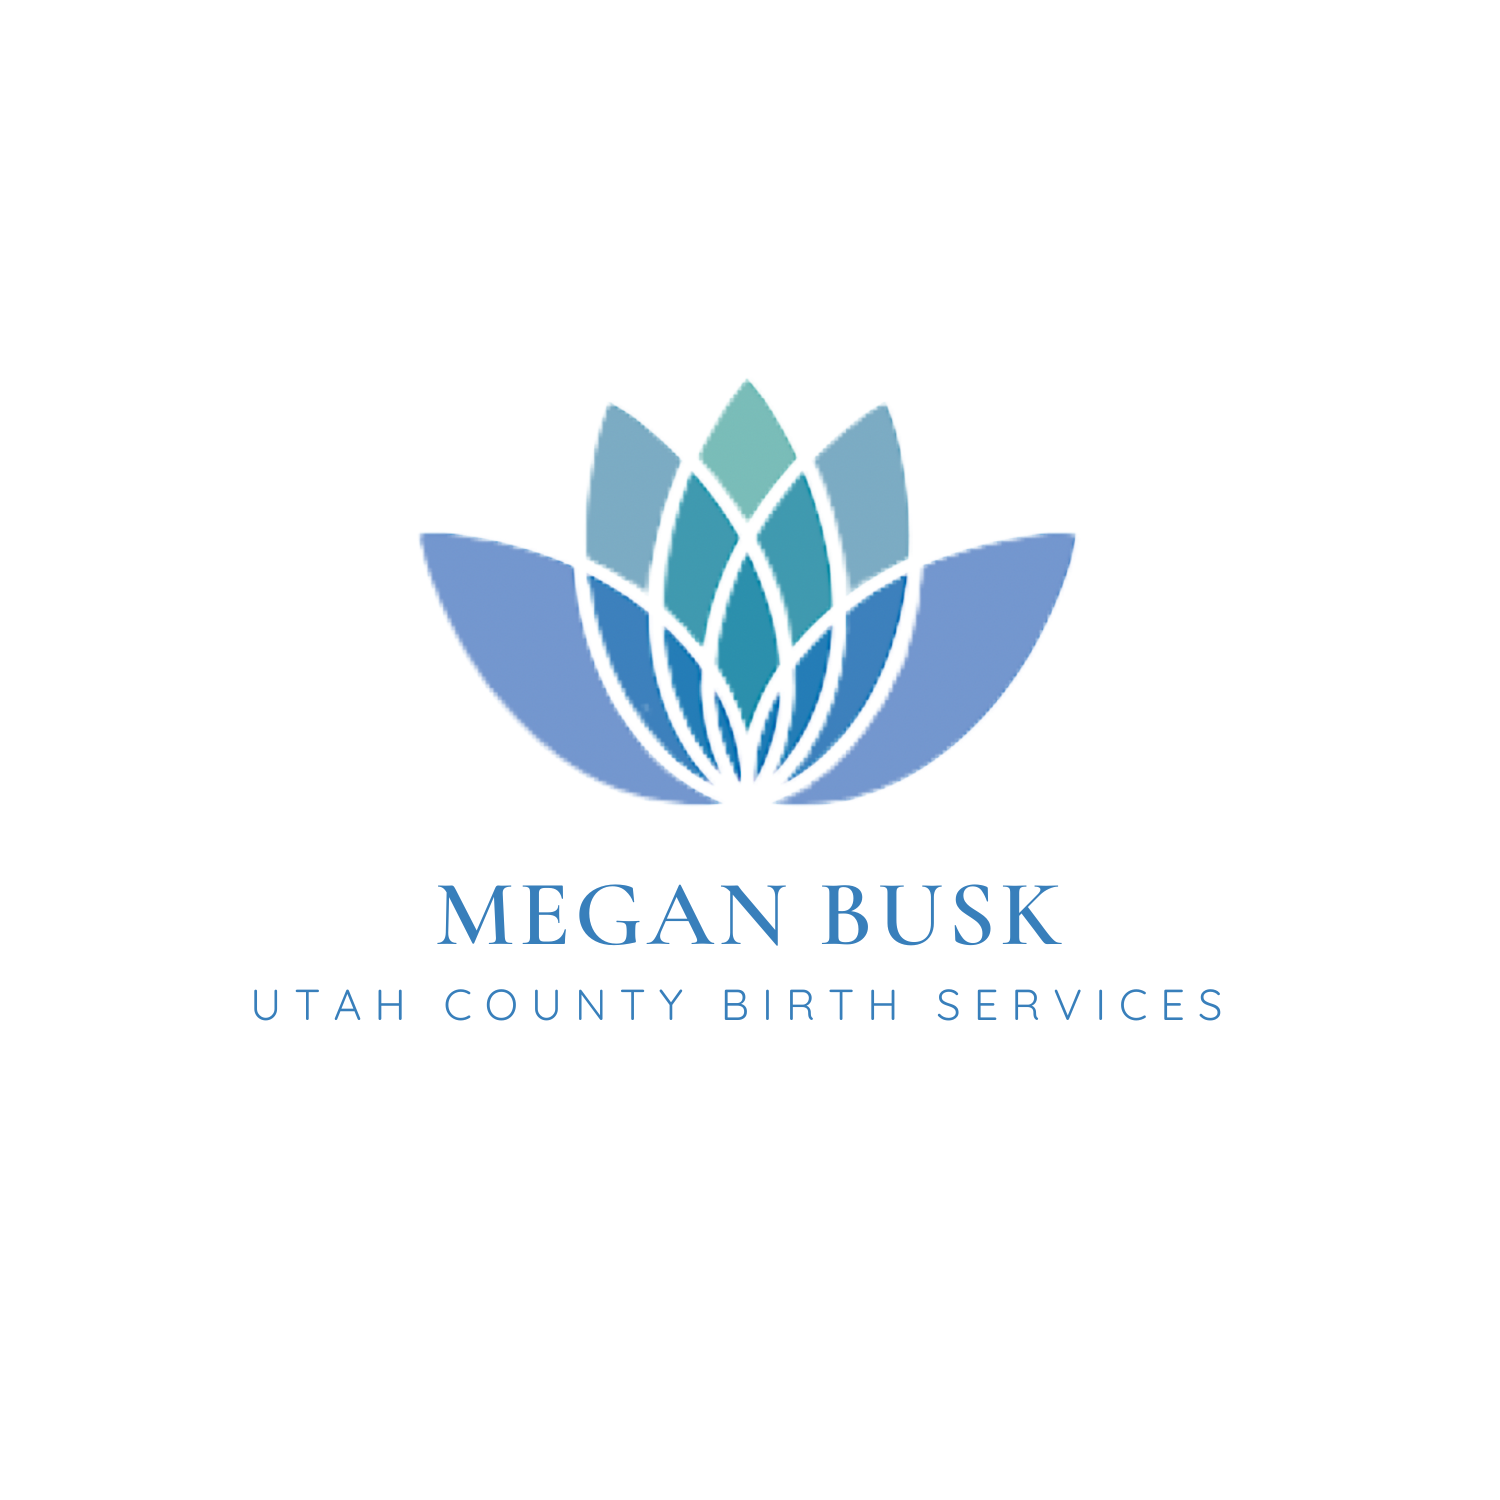 Utah County Birth Services